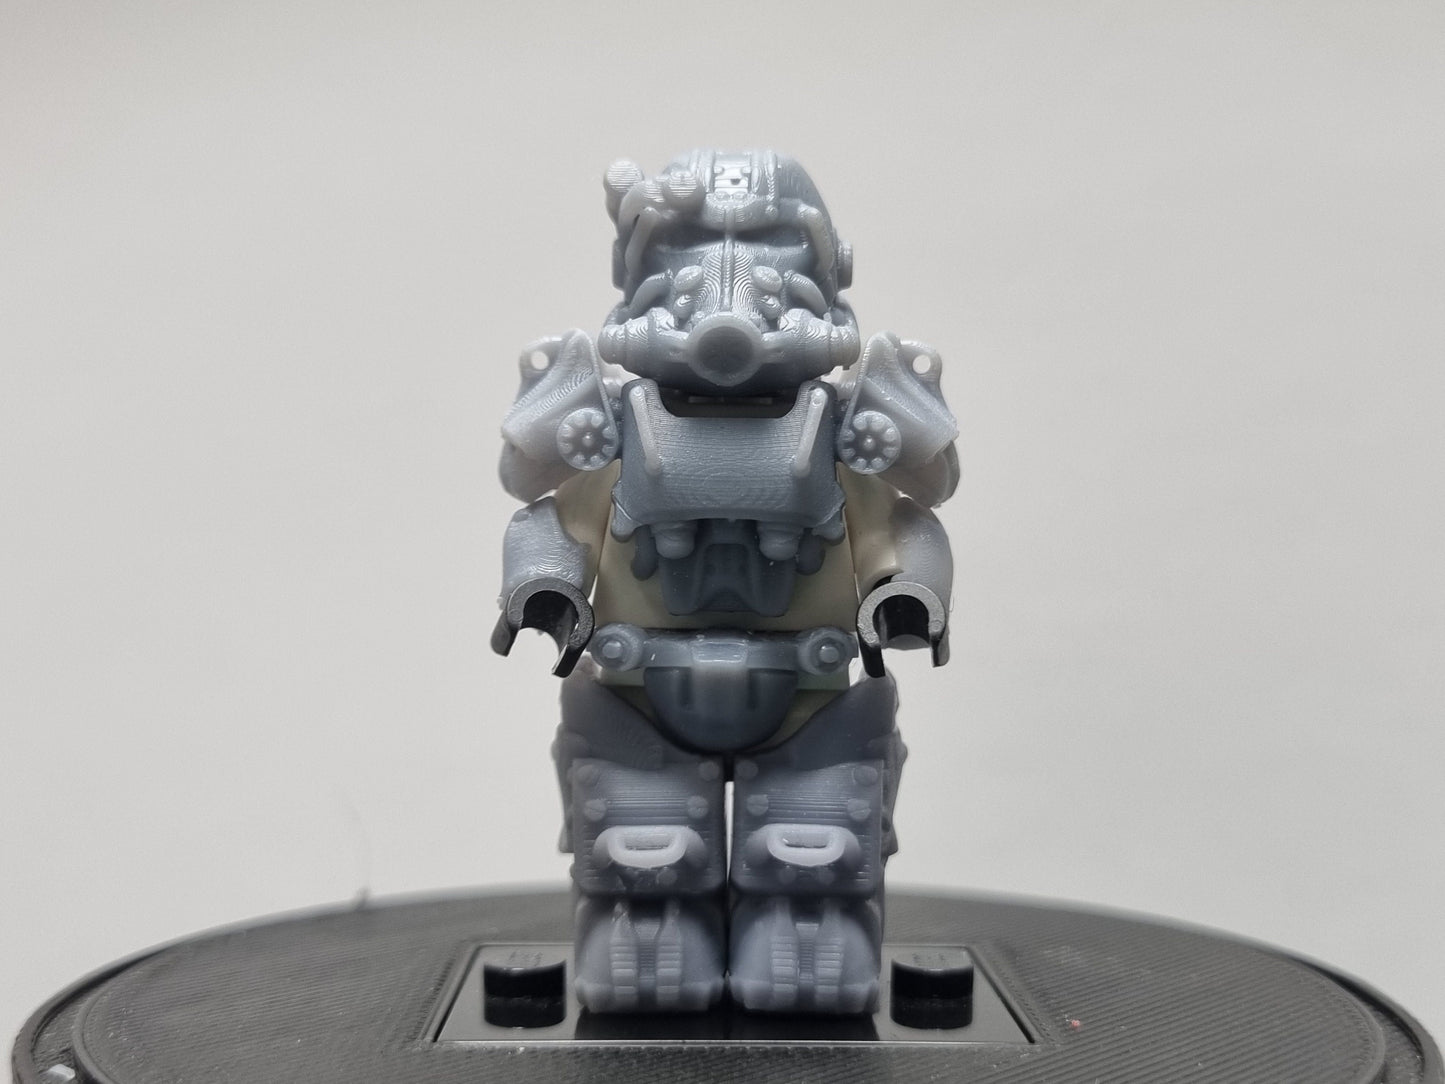 Building toy custom 3D printed waste land armor set